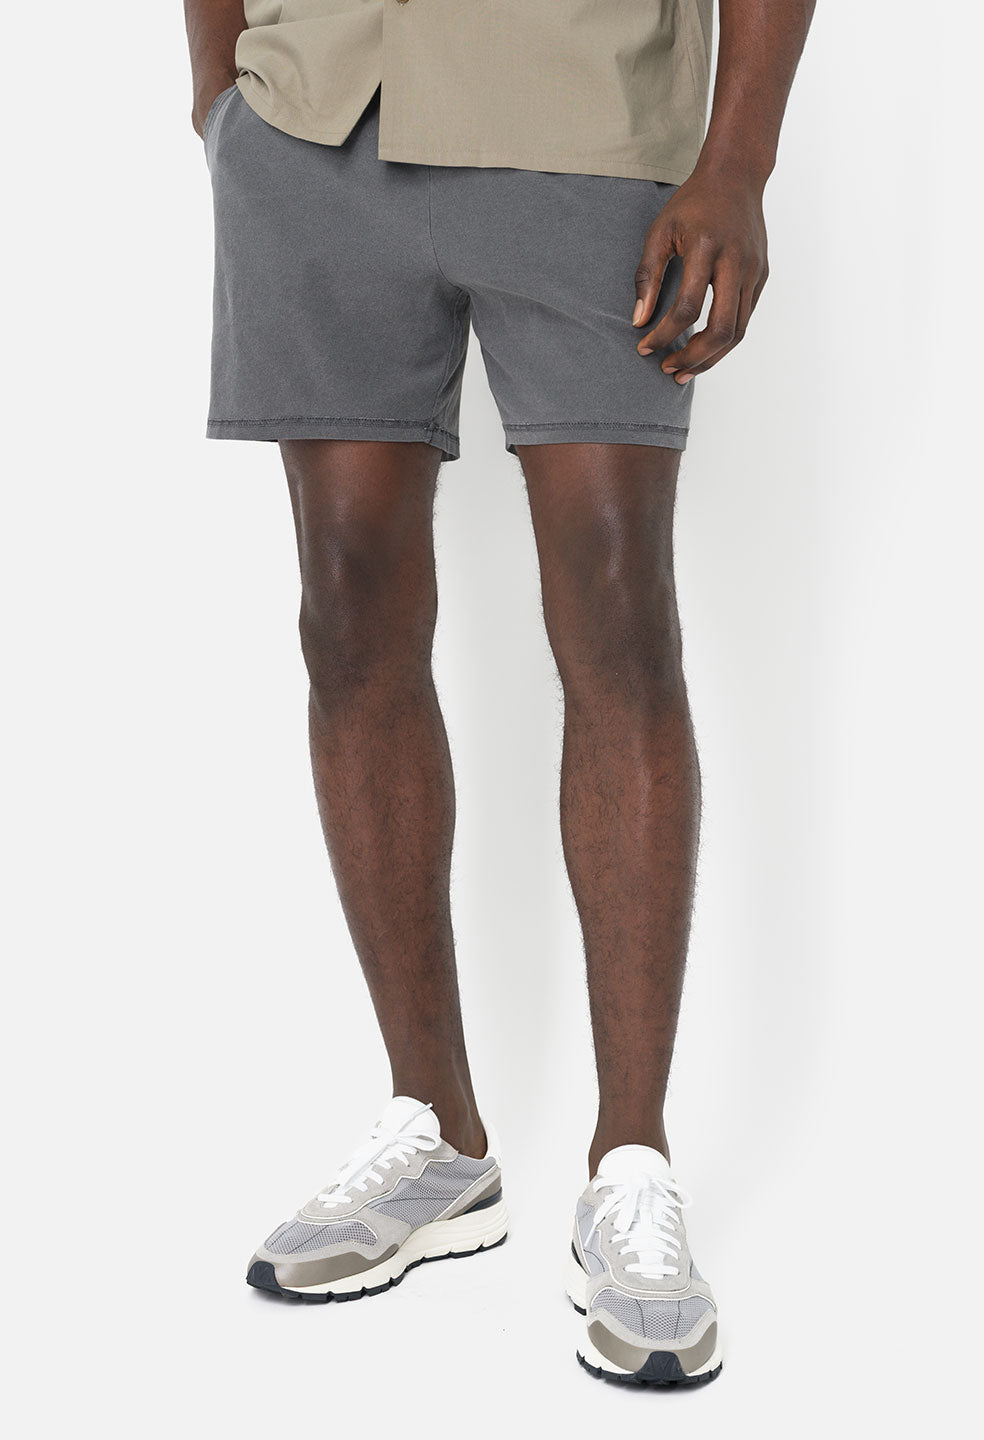 Jersey Shorts for Men, Black & Gray Jersey Shorts